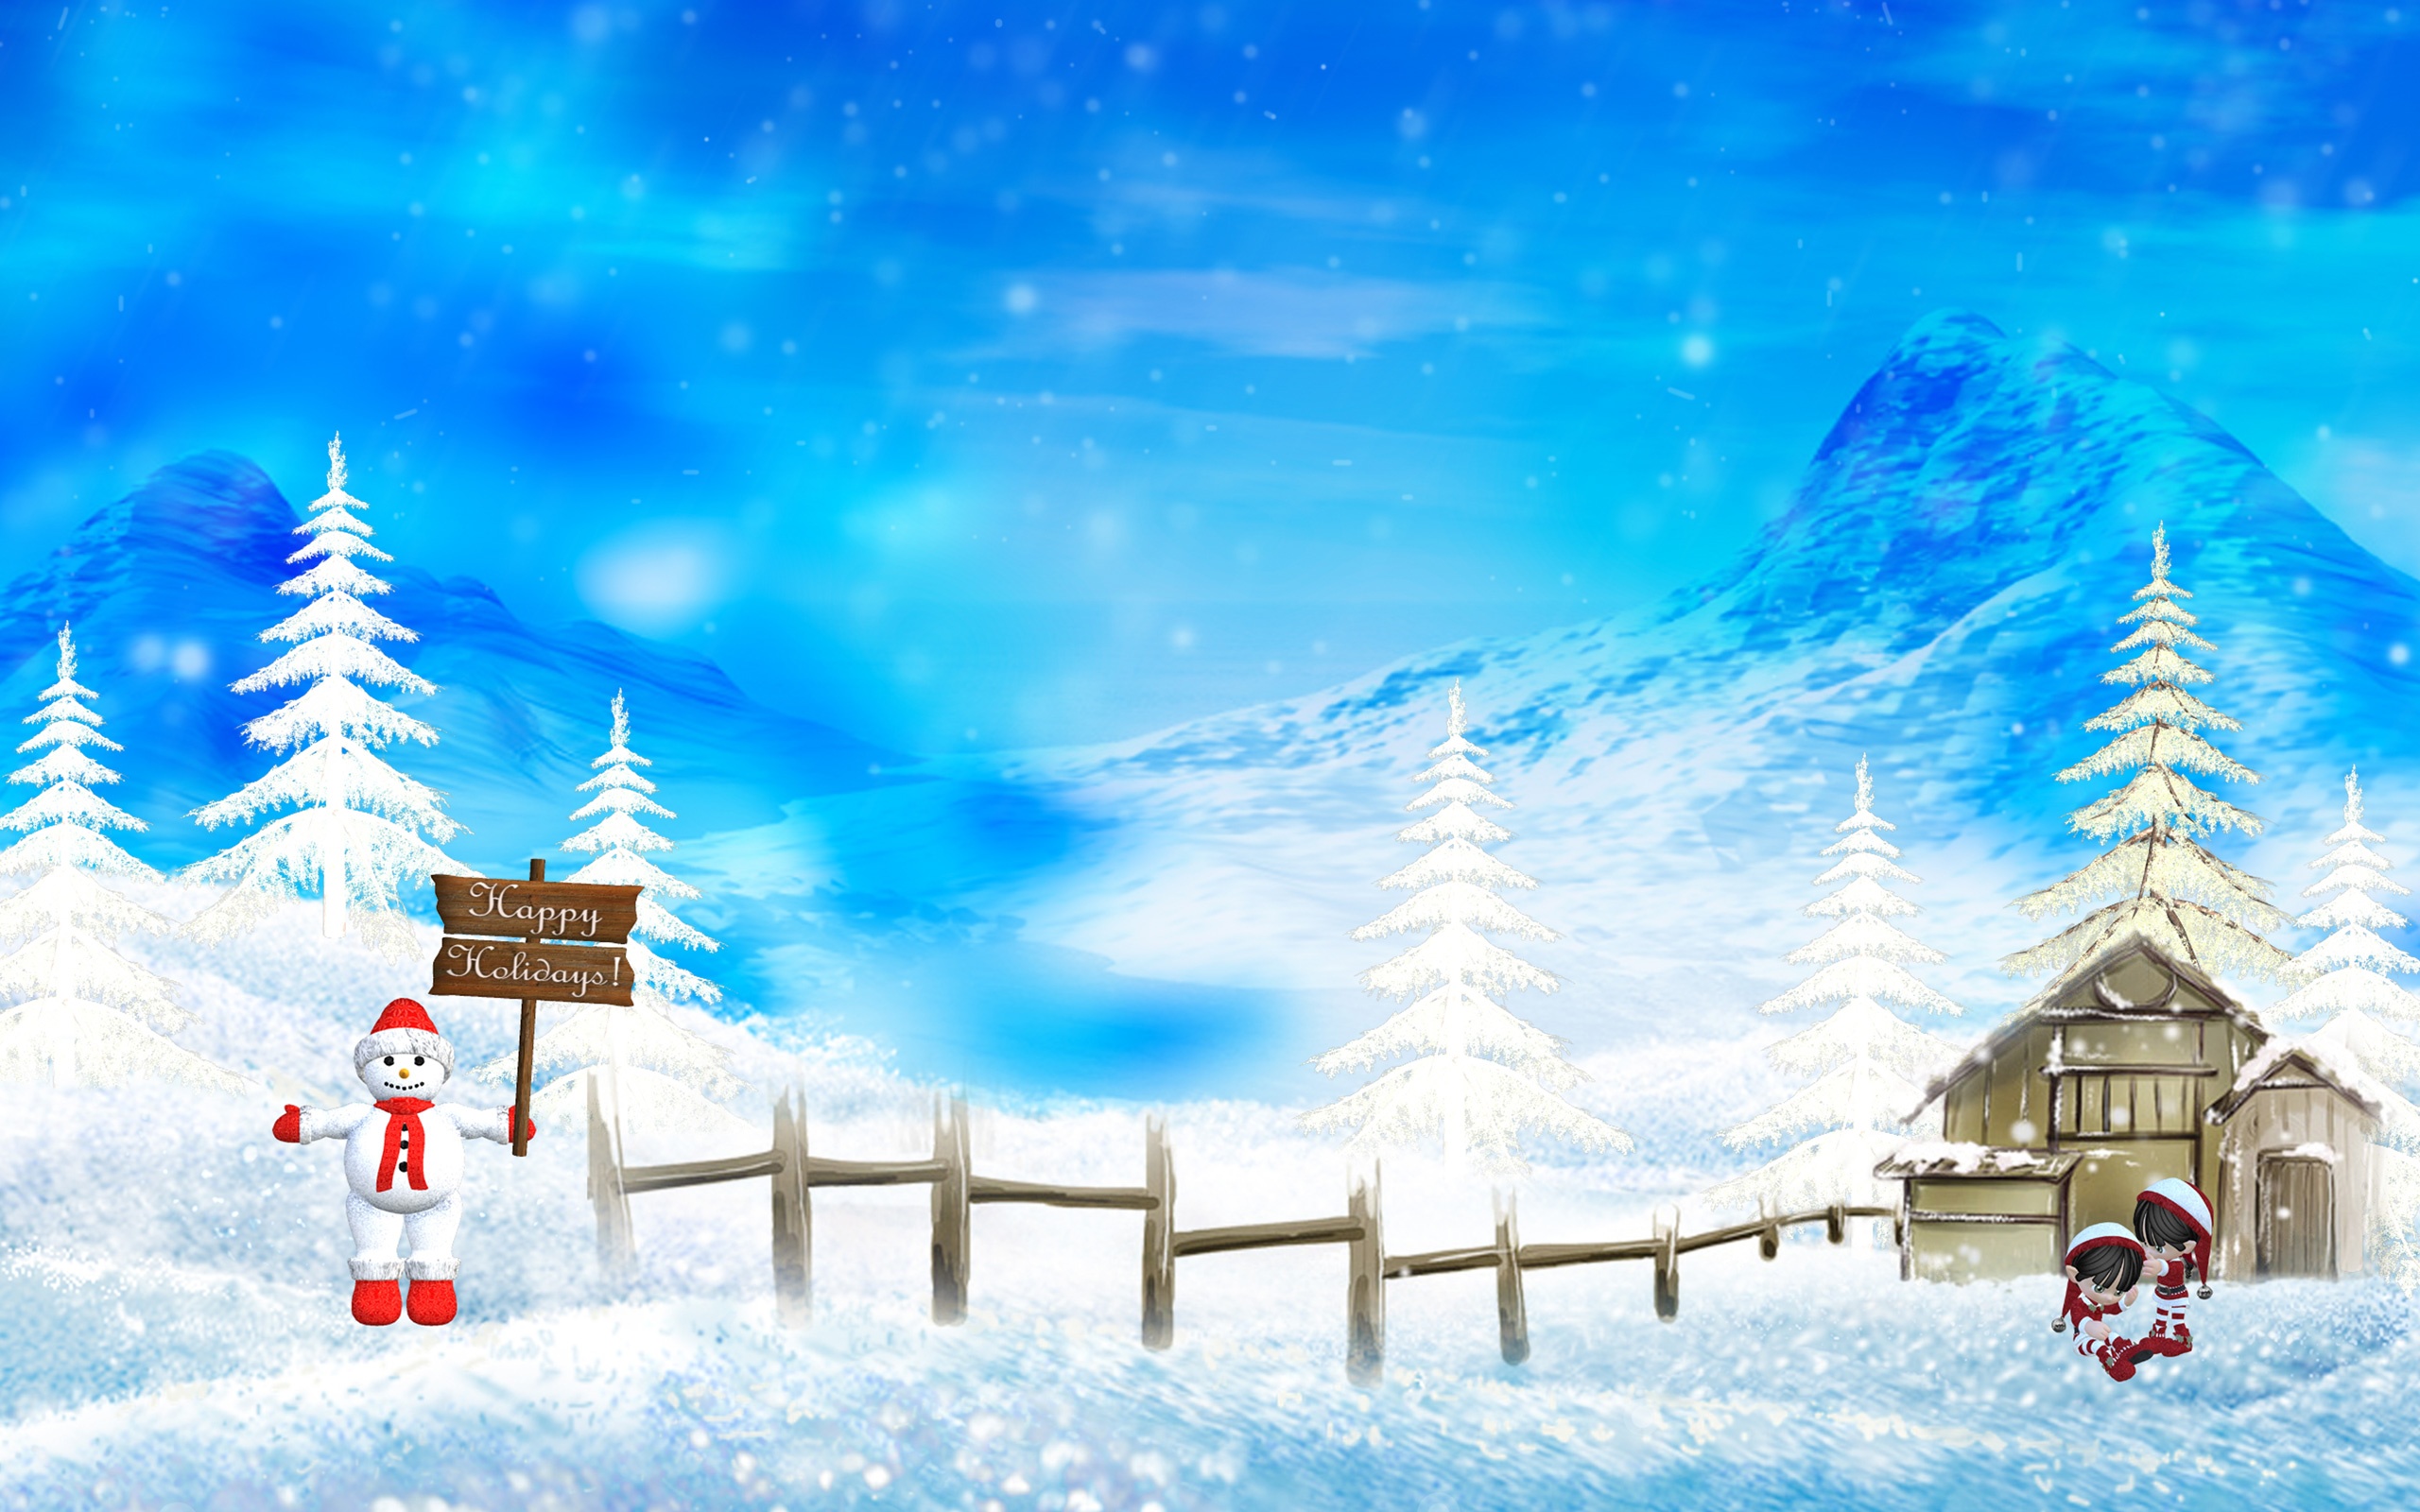 Merry Christmas Beautiful Snow Scene Wallpaper Holidays